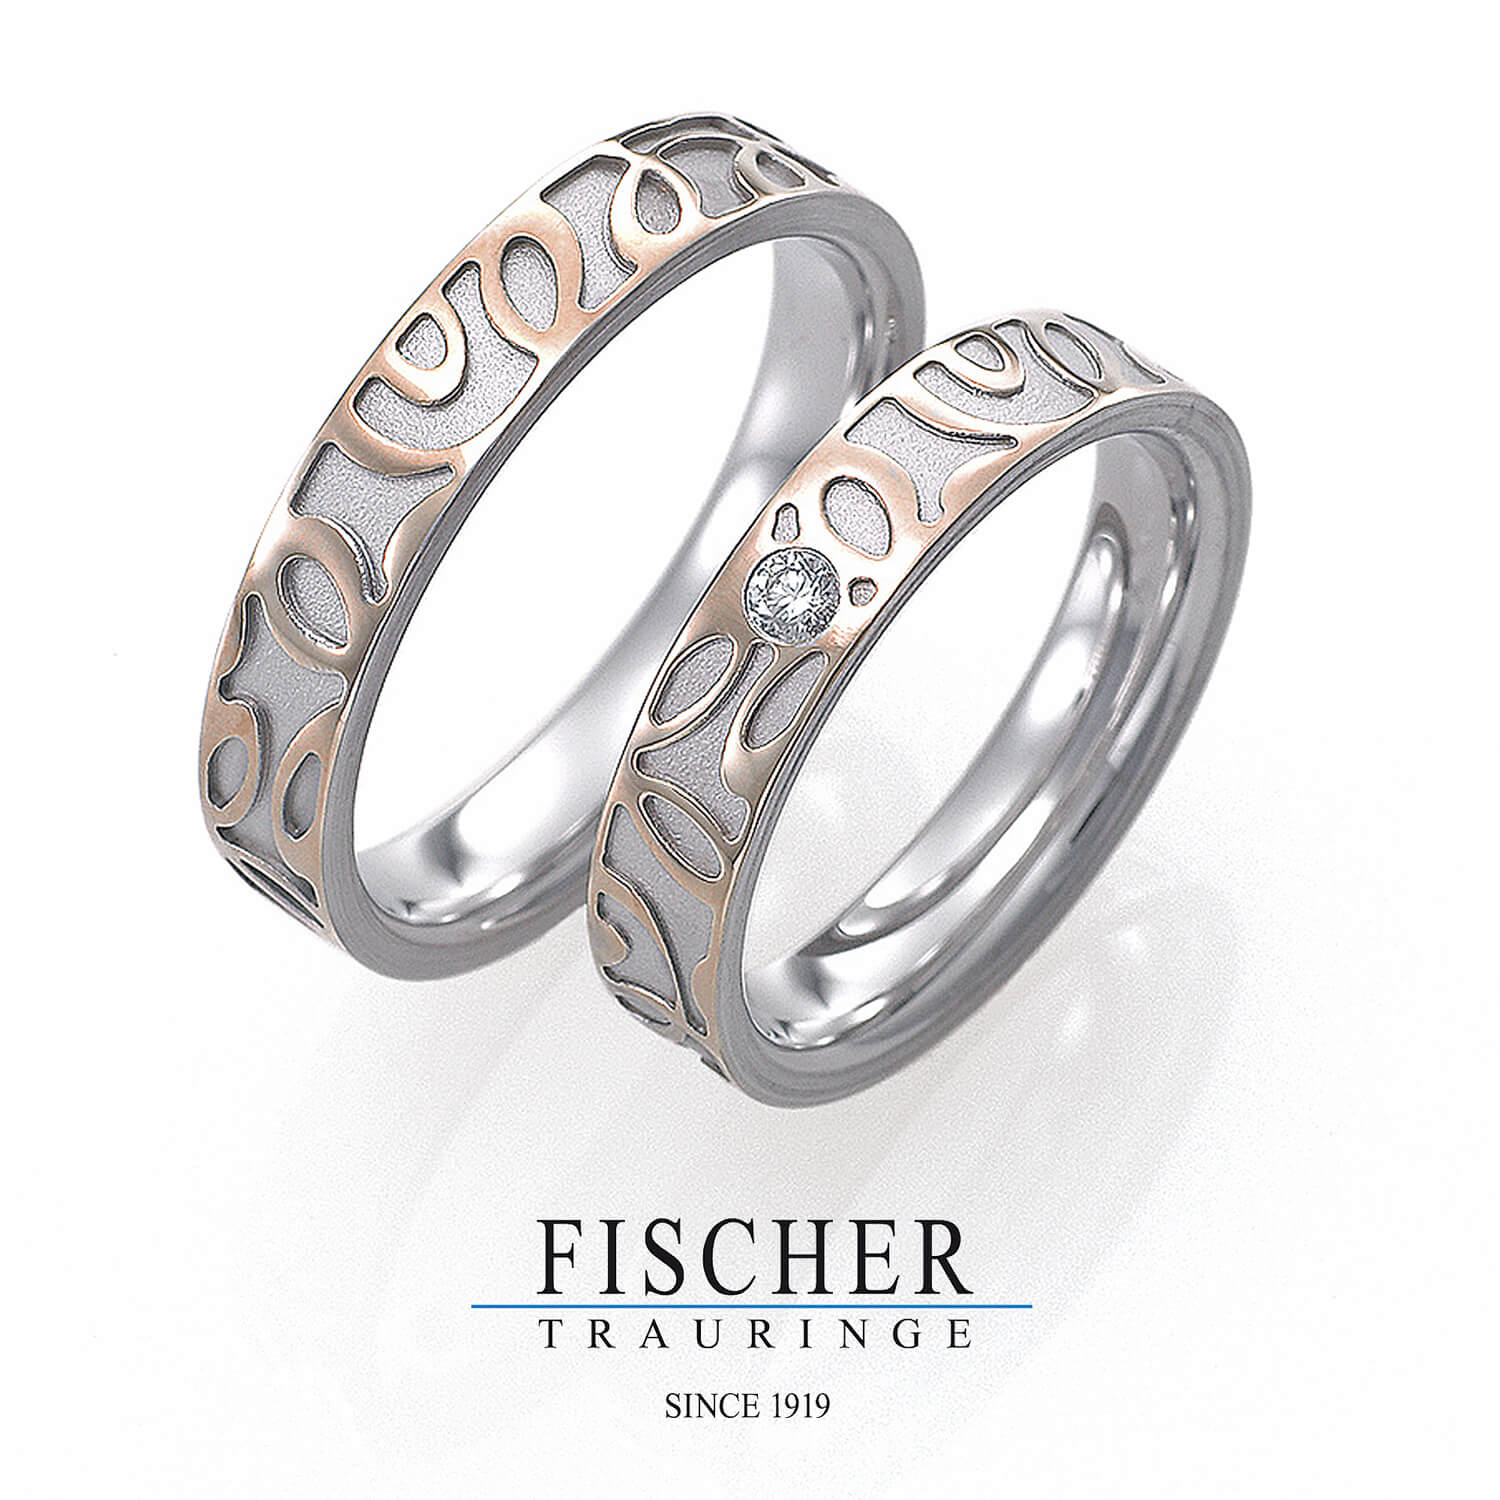 FISCHERフィッシャーの結婚指輪でWeddingRingウェディングリング9750289-040と9650289-040